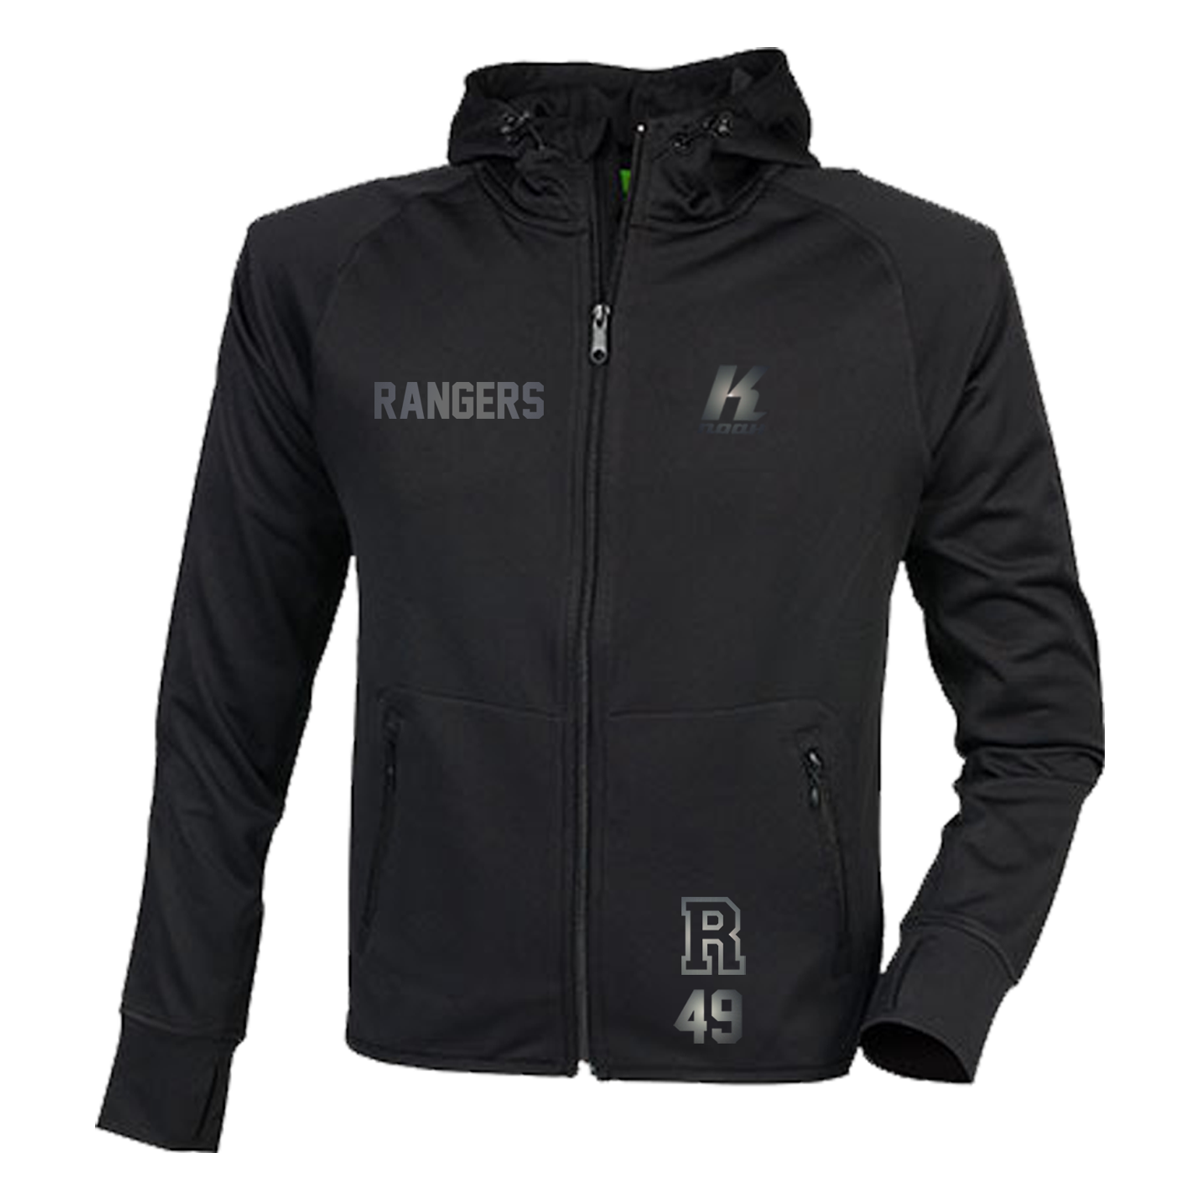 Rangers "Blackline" Zip Hoodie TL550 with Playernumber or Initials